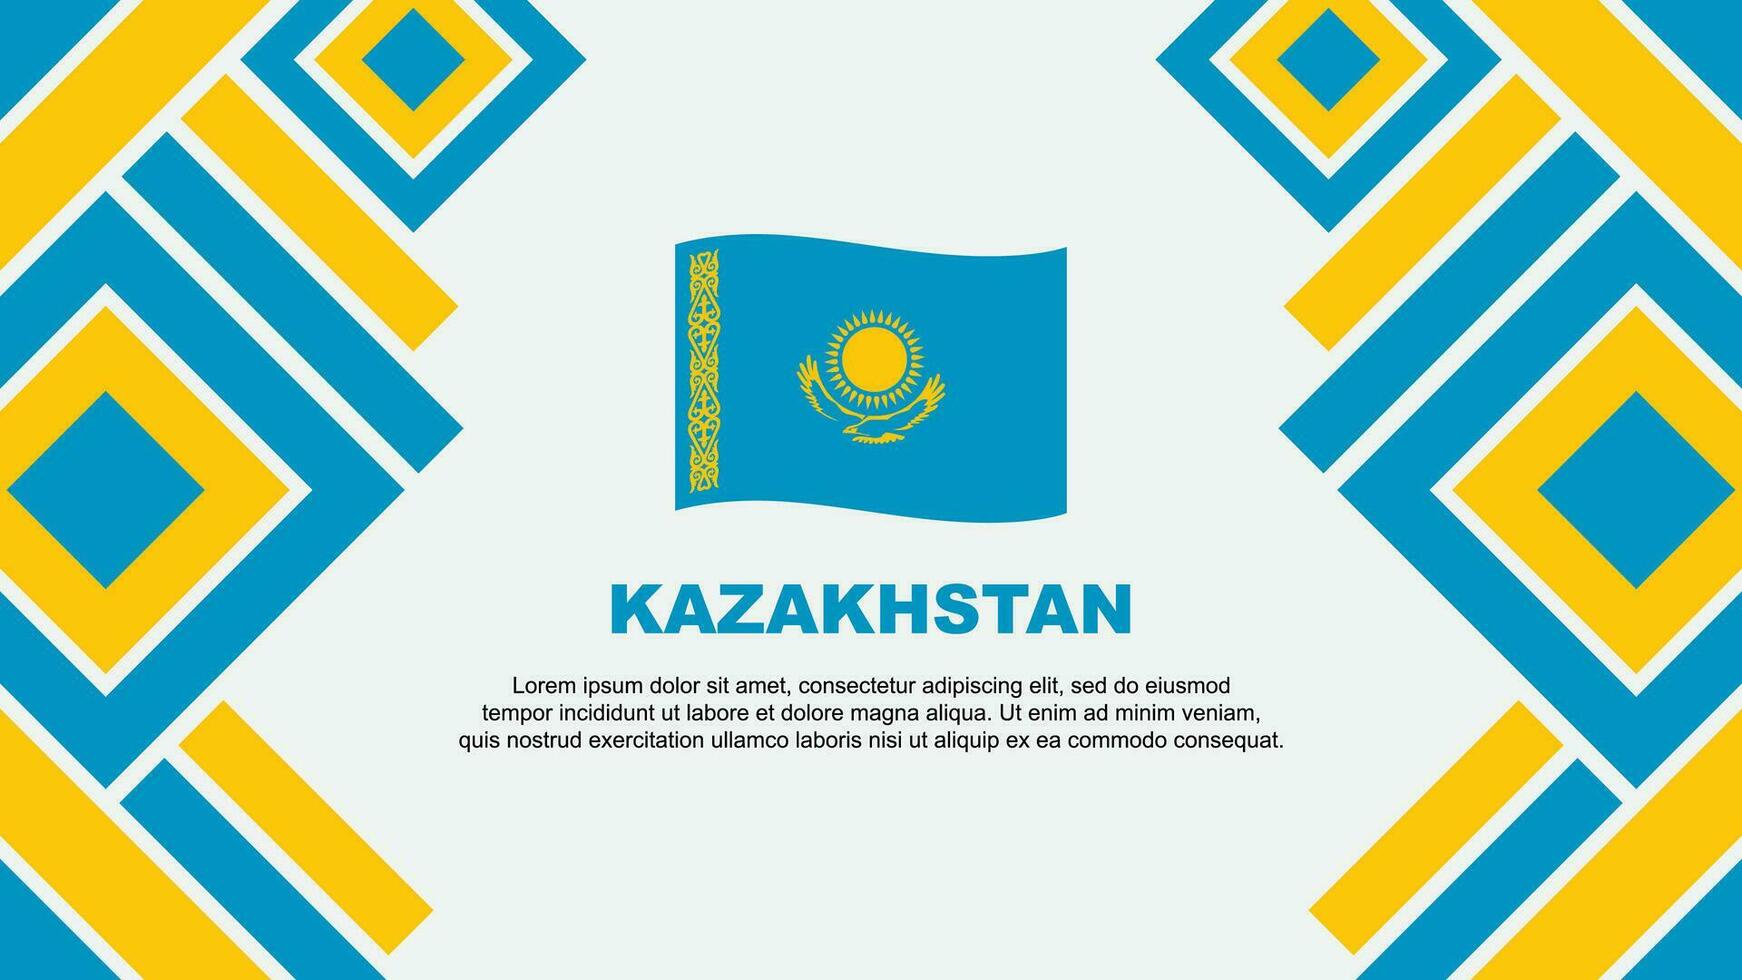 Kazakhstan Flag Abstract Background Design Template. Kazakhstan Independence Day Banner Wallpaper Vector Illustration. Kazakhstan